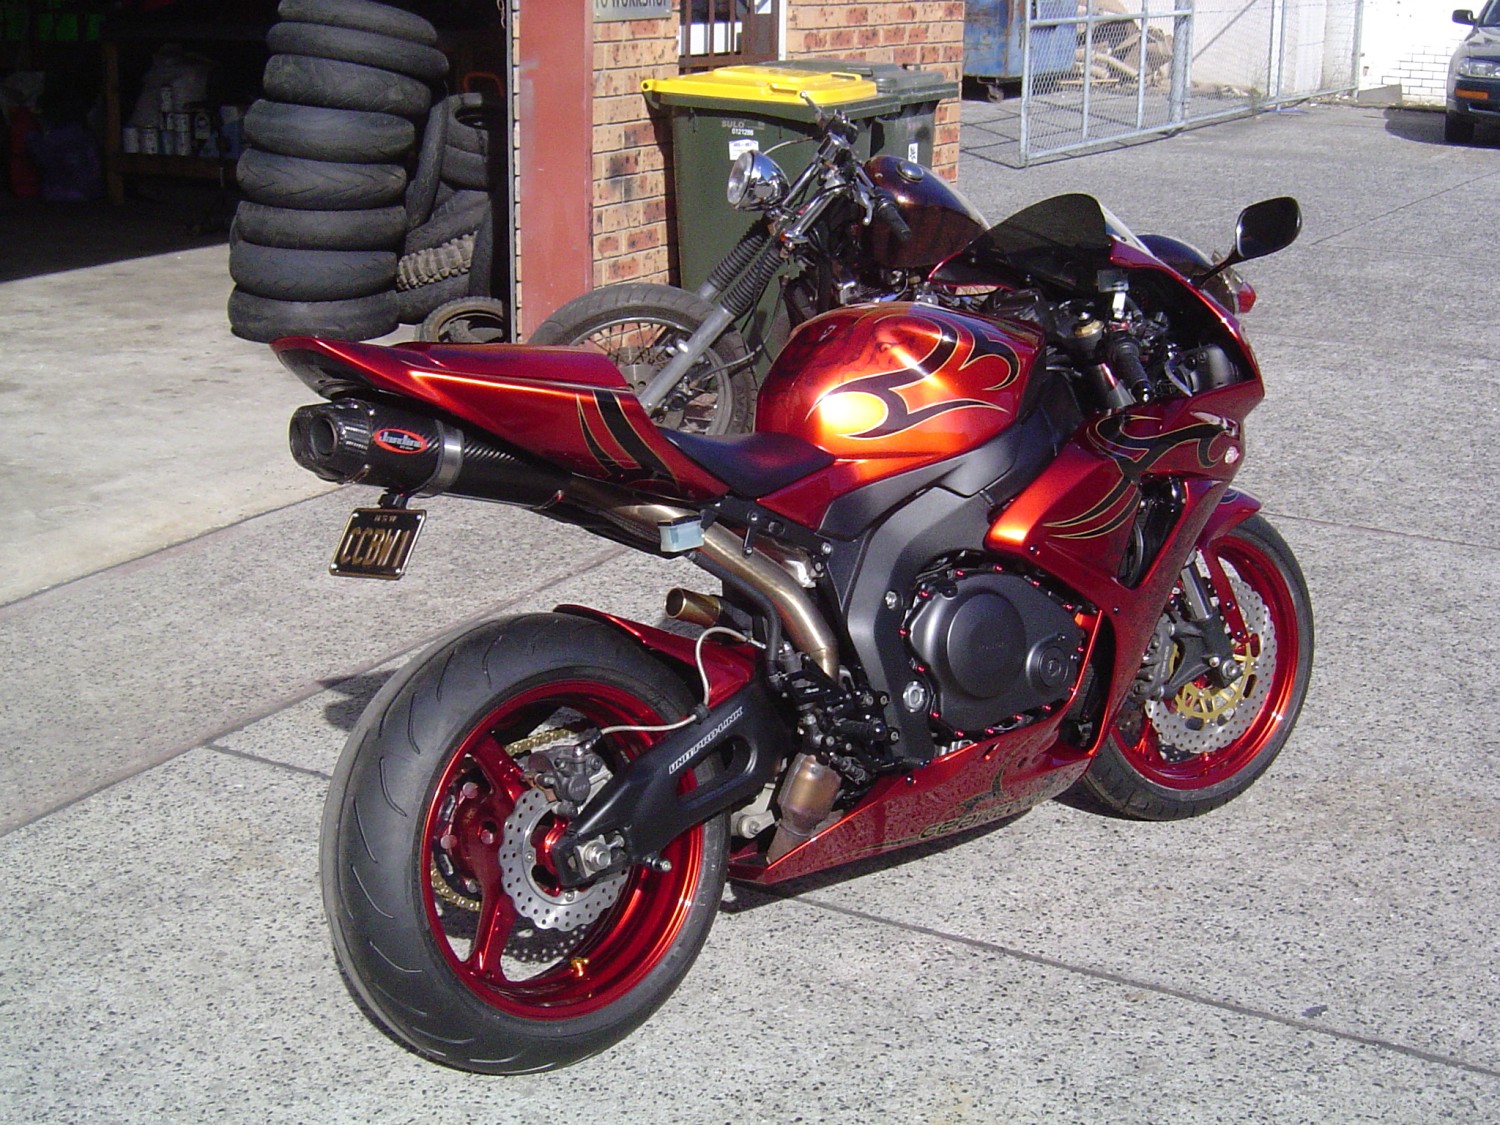 2007 Honda cbr1000rr - ccbikeworks - Shannons Club